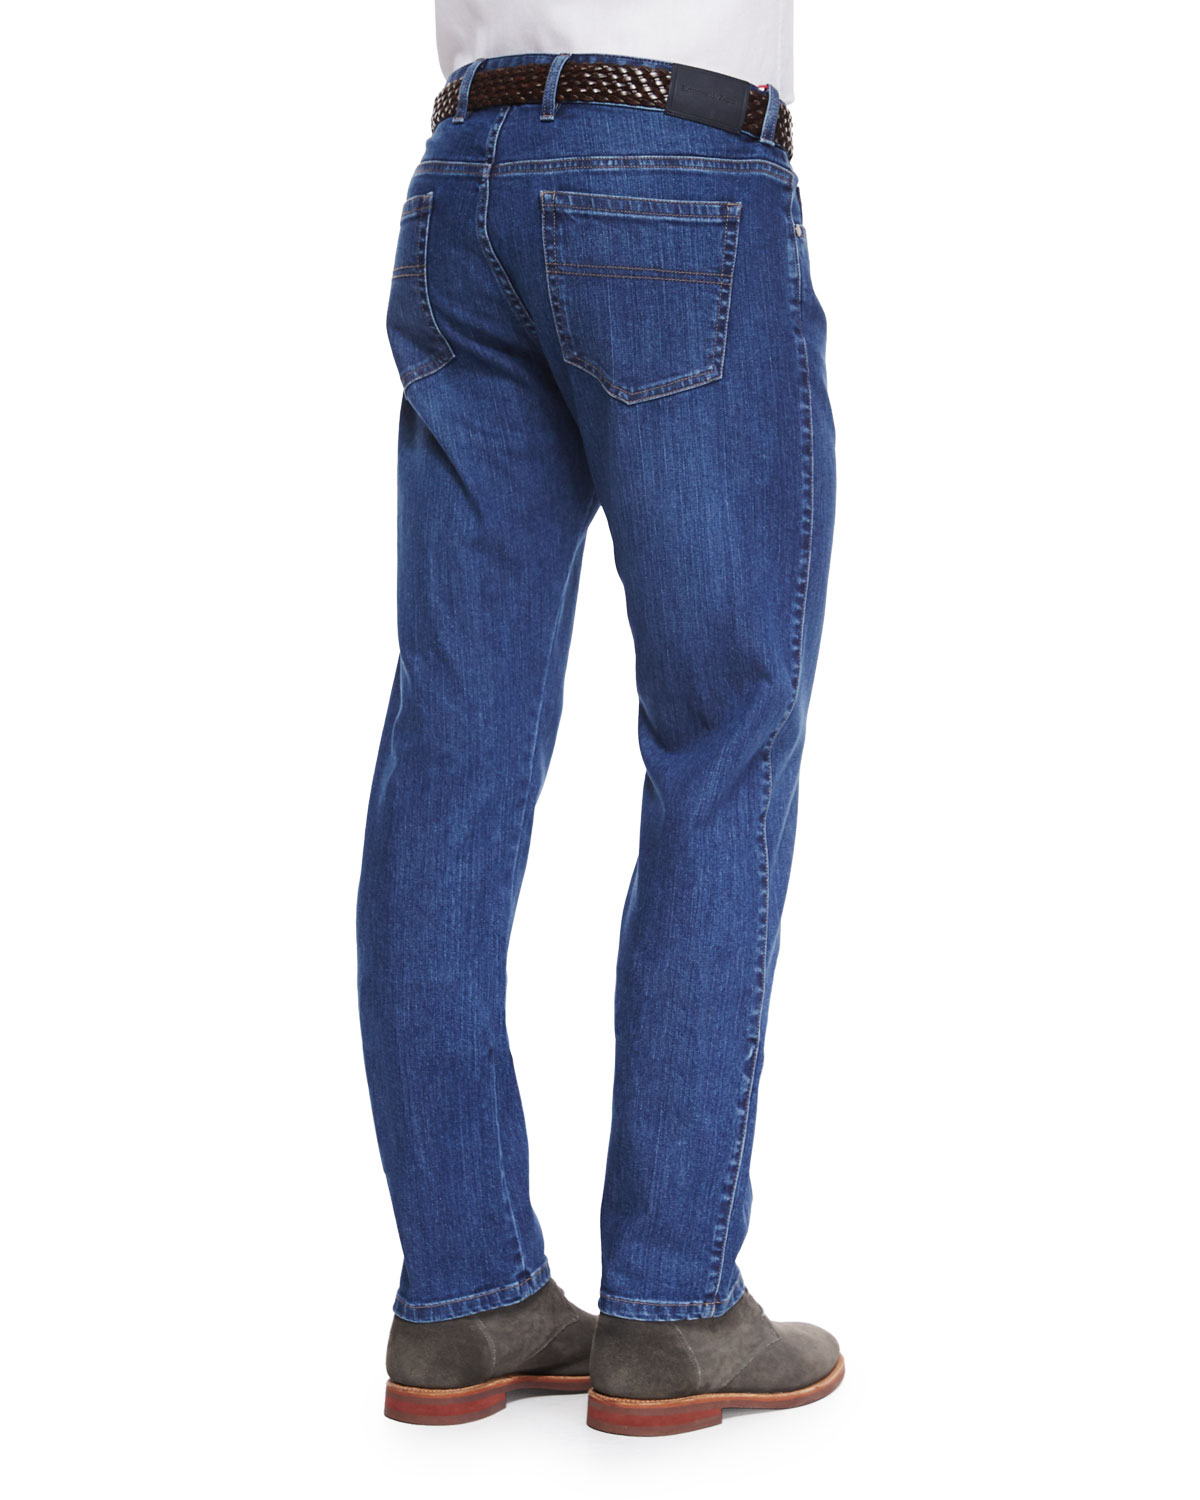 Lyst - Ermenegildo Zegna Slim Fit Stretch-Denim Jeans in Blue for Men